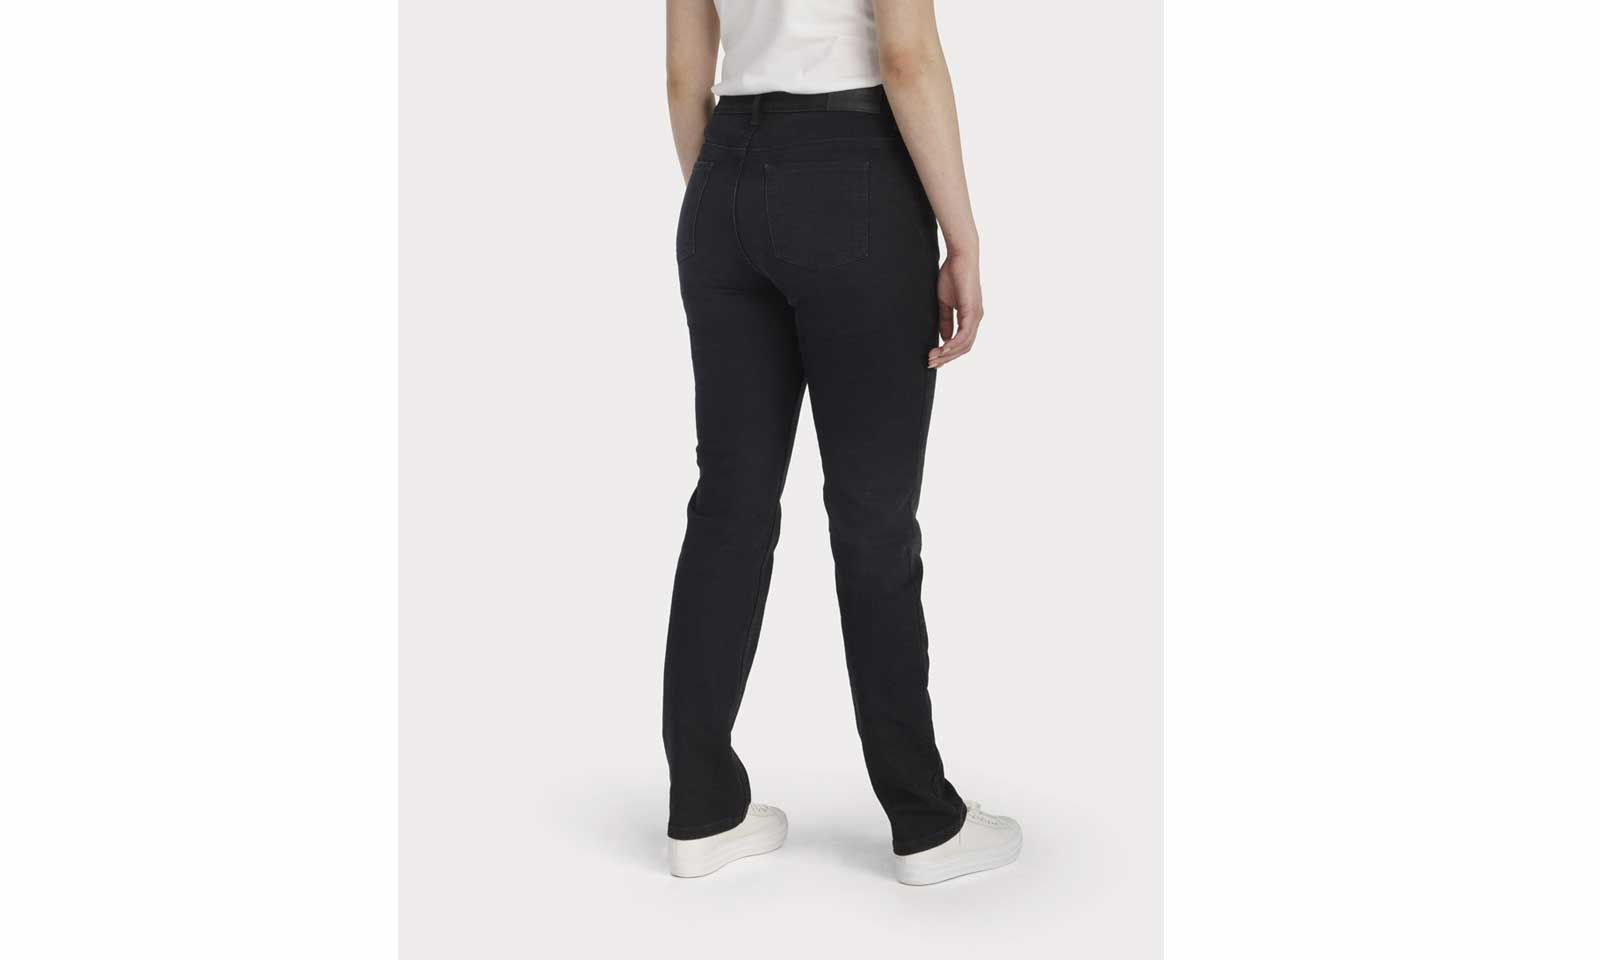 Buy Black Beauty: 2-Cut Knee Black Jeans for Women (26, Black) at Amazon.in